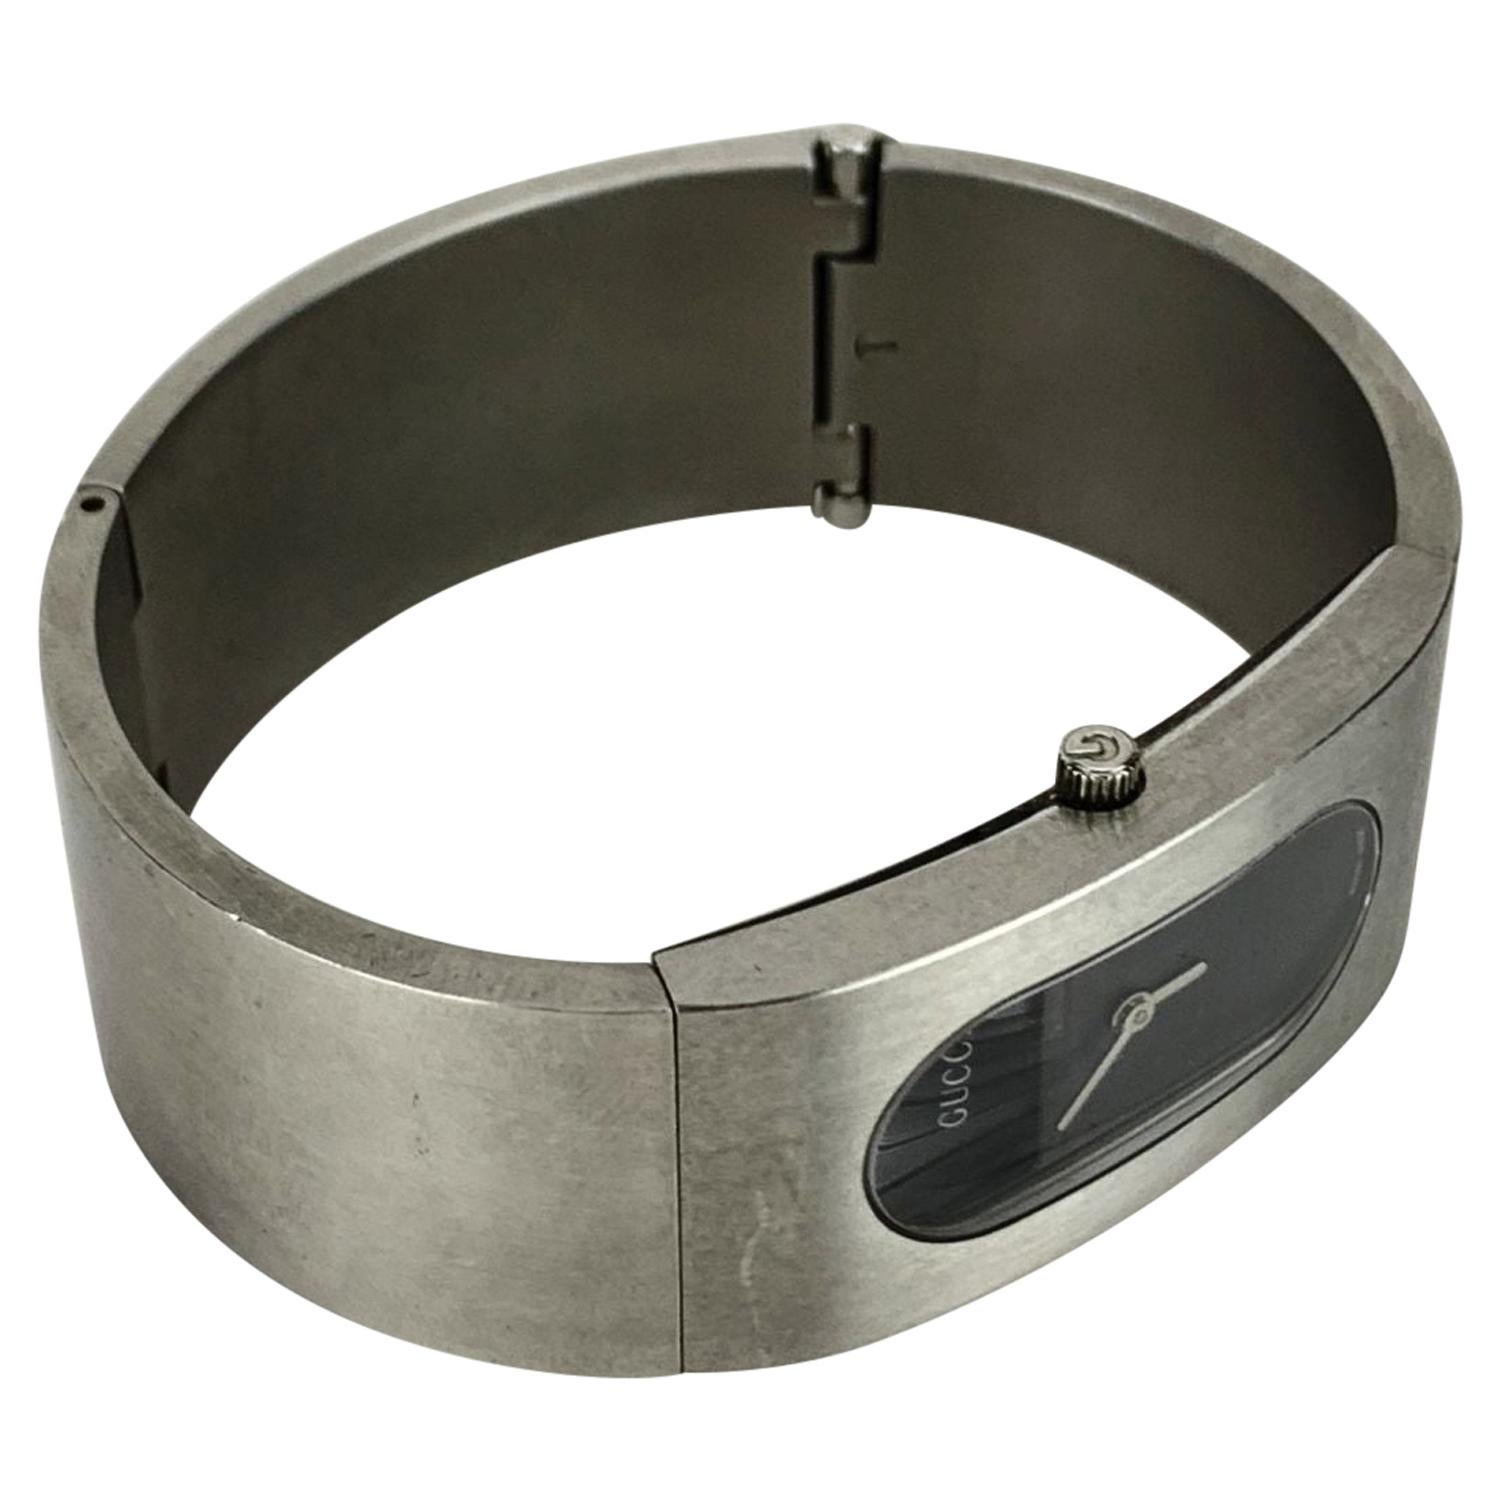 Gucci Stainless Steel Mod 2400 L Bangle Bracelet Wrist Watch